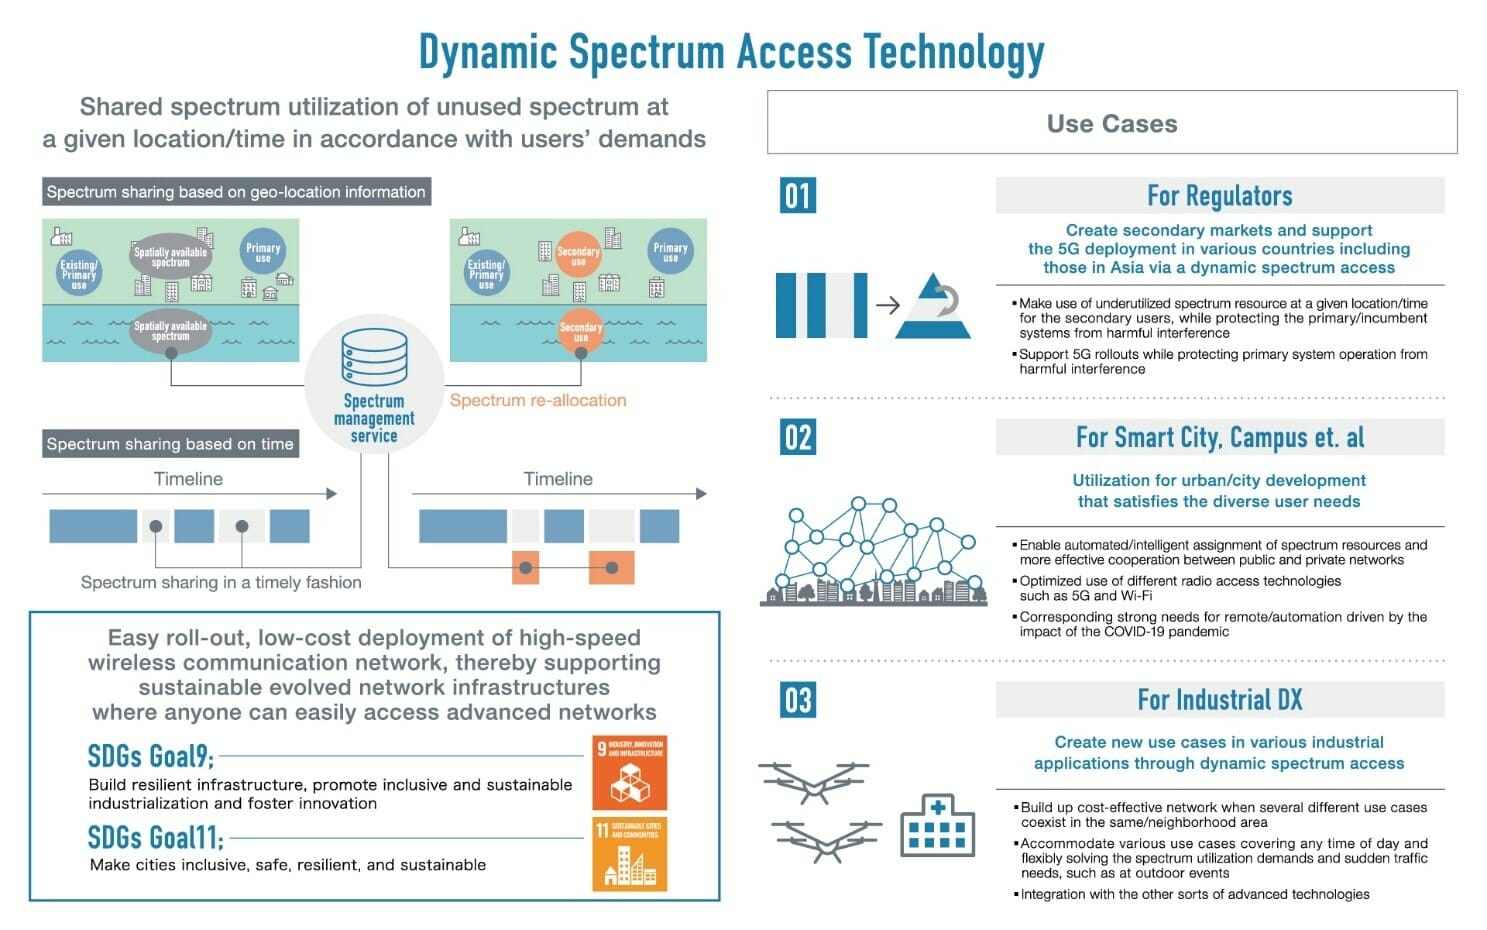 Sony จับมือ Mitsui พัฒนาระบบ Standalone 5G Enabling Dynamic Spectrum Access Systemได้สำเร็จเป็นครั้งแรกของโลก 1